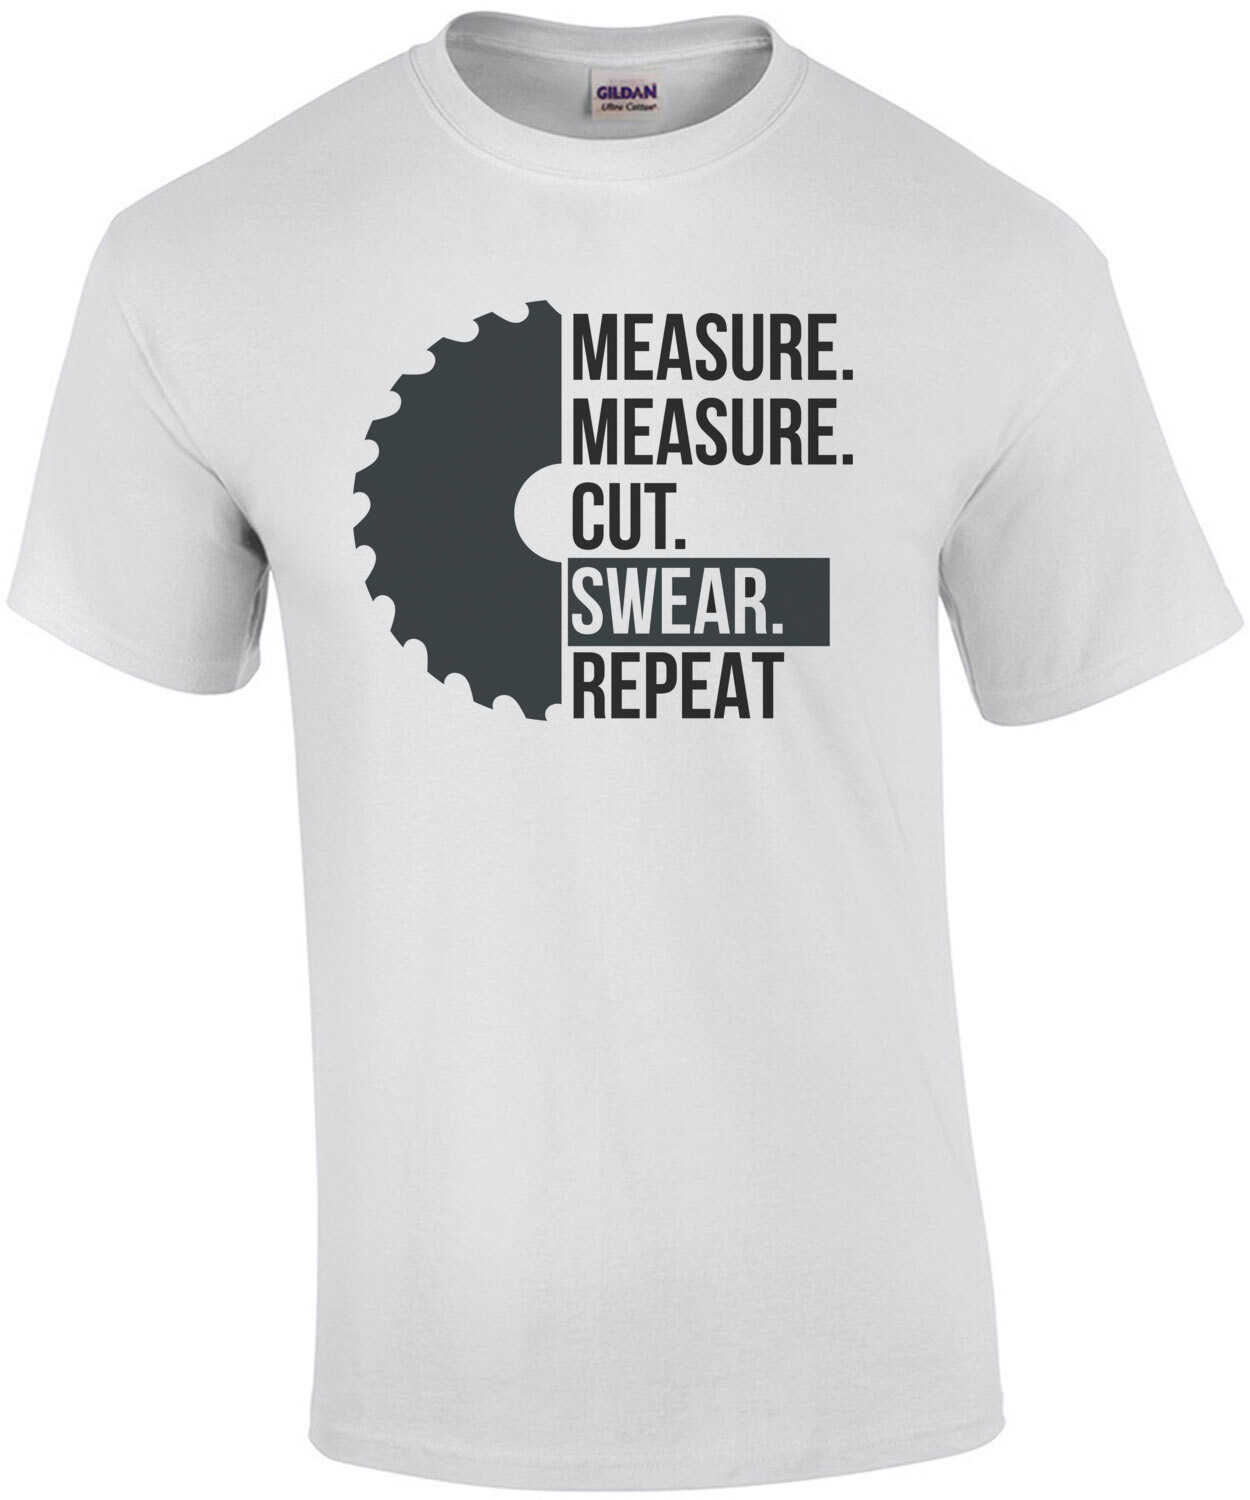 Measure. Measure. Cut. Swear. Repeat. Carpenter Handyman T-Shirt